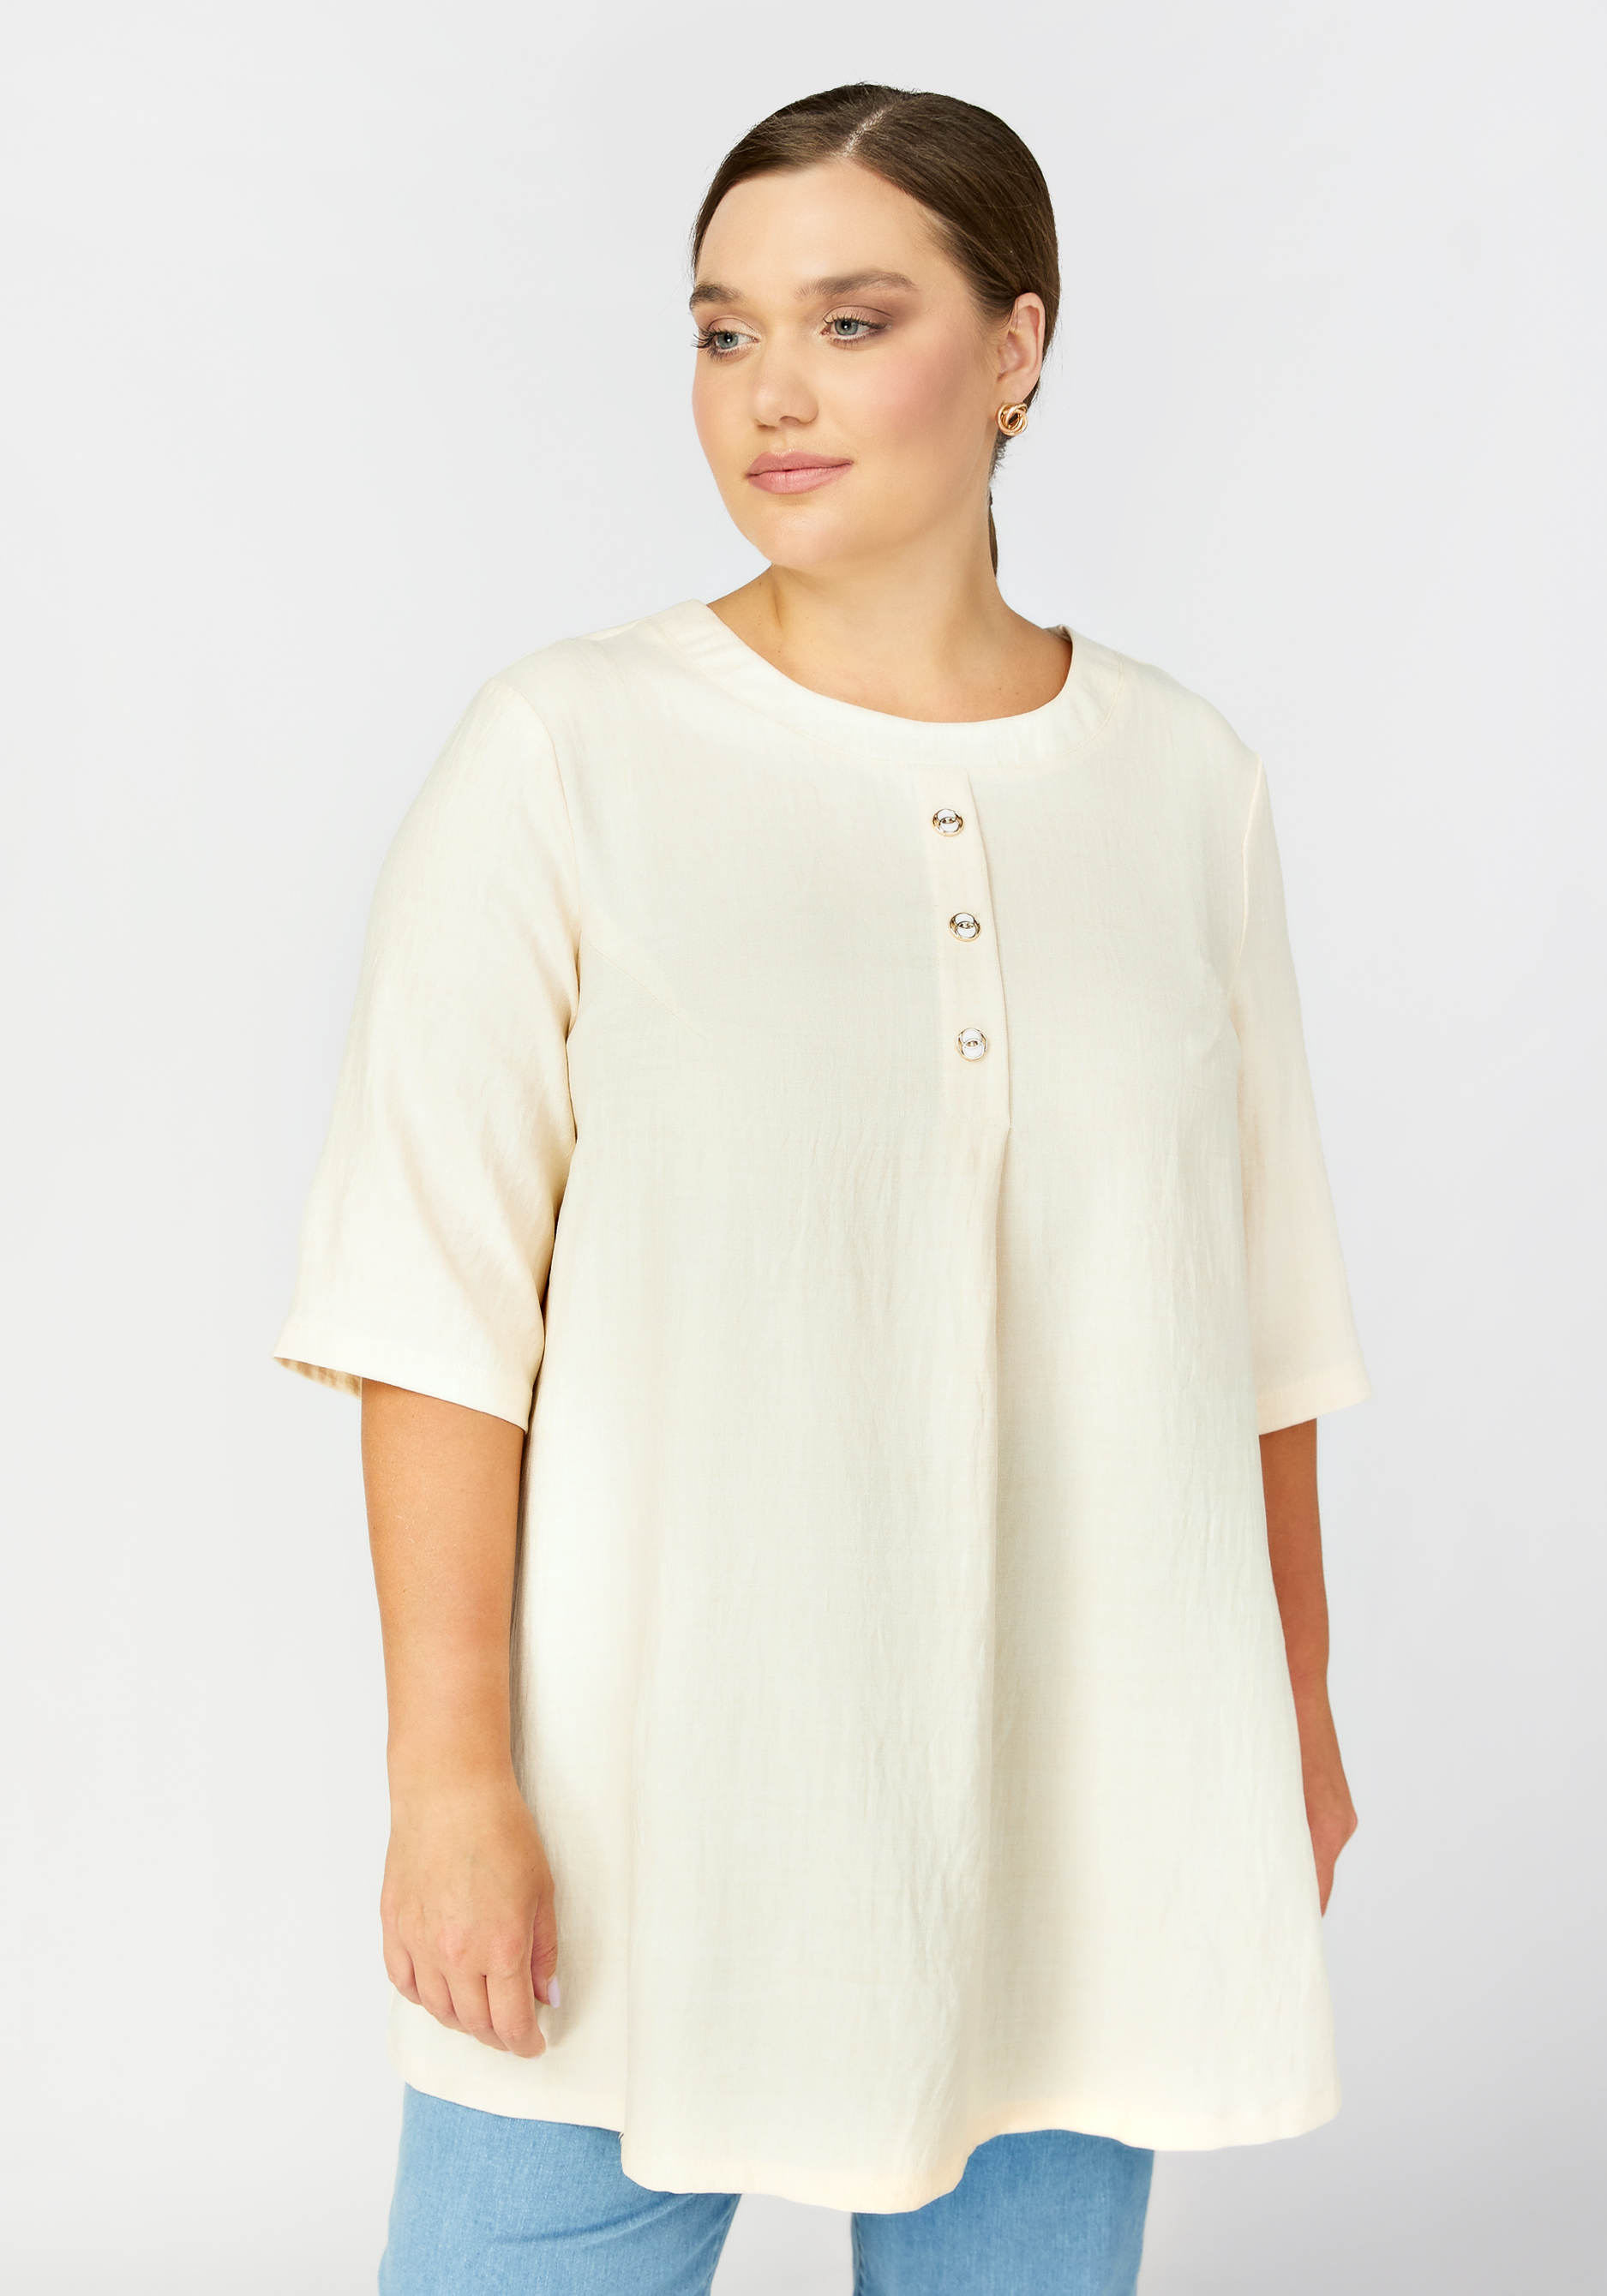 Блуза с планкой на пуговицах жен блуза арт 16 0316 белый р 48